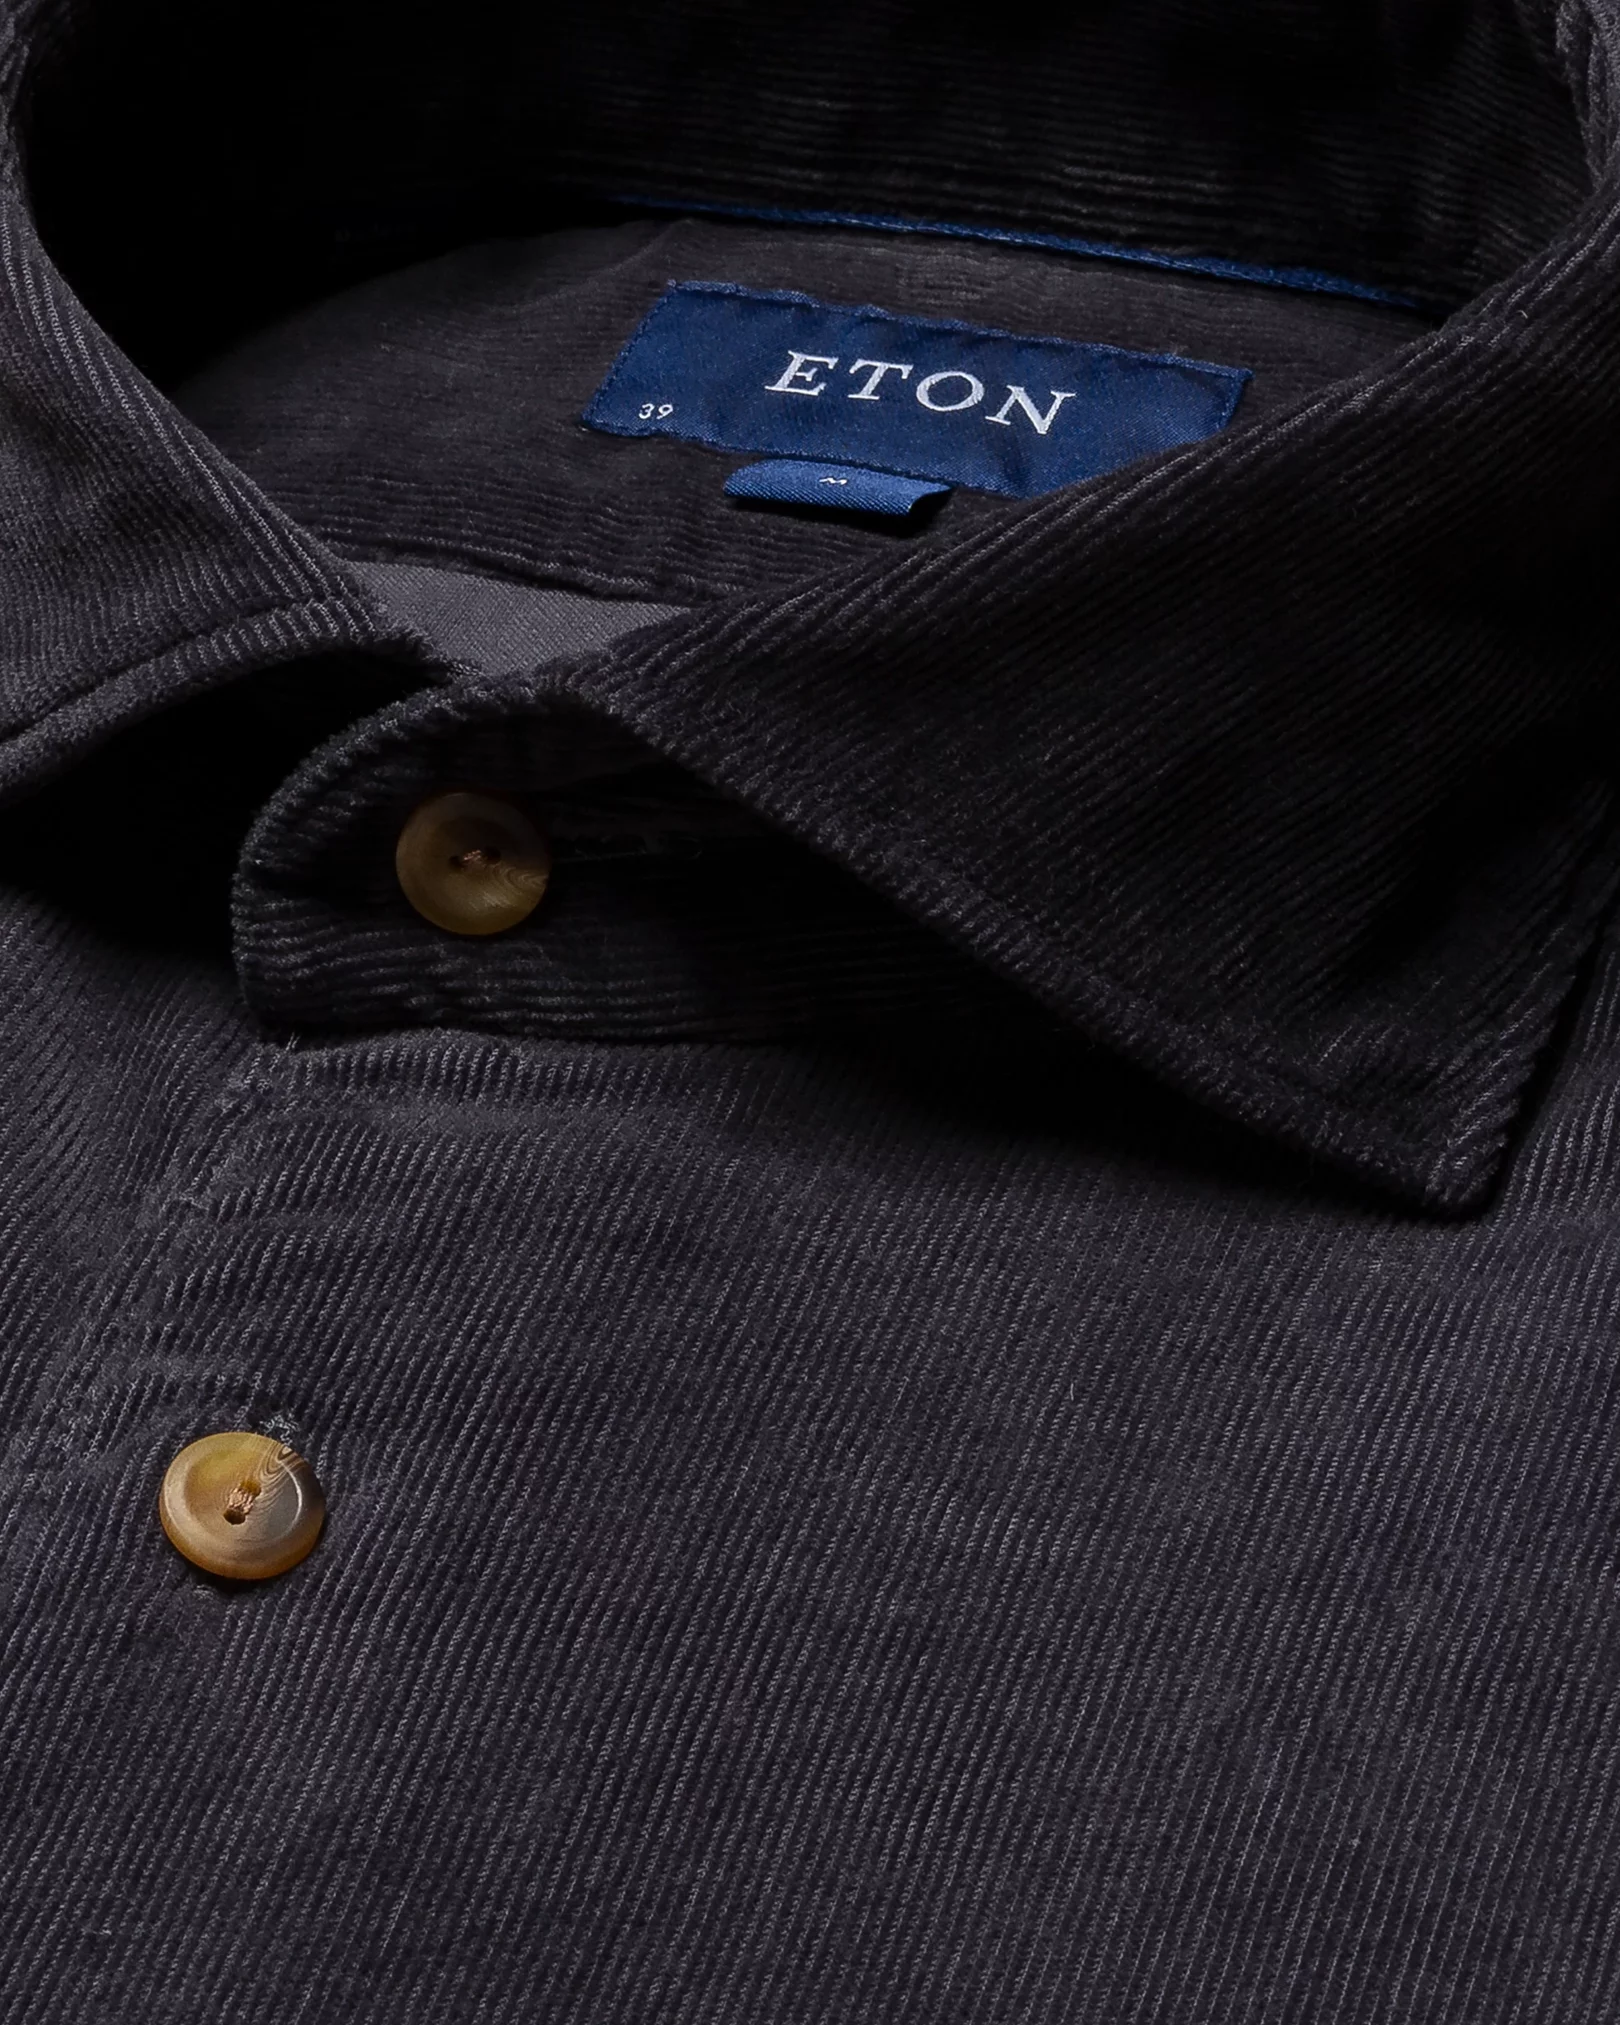 Eton - dark blue corduroy wide spread casual single rounded slim soft